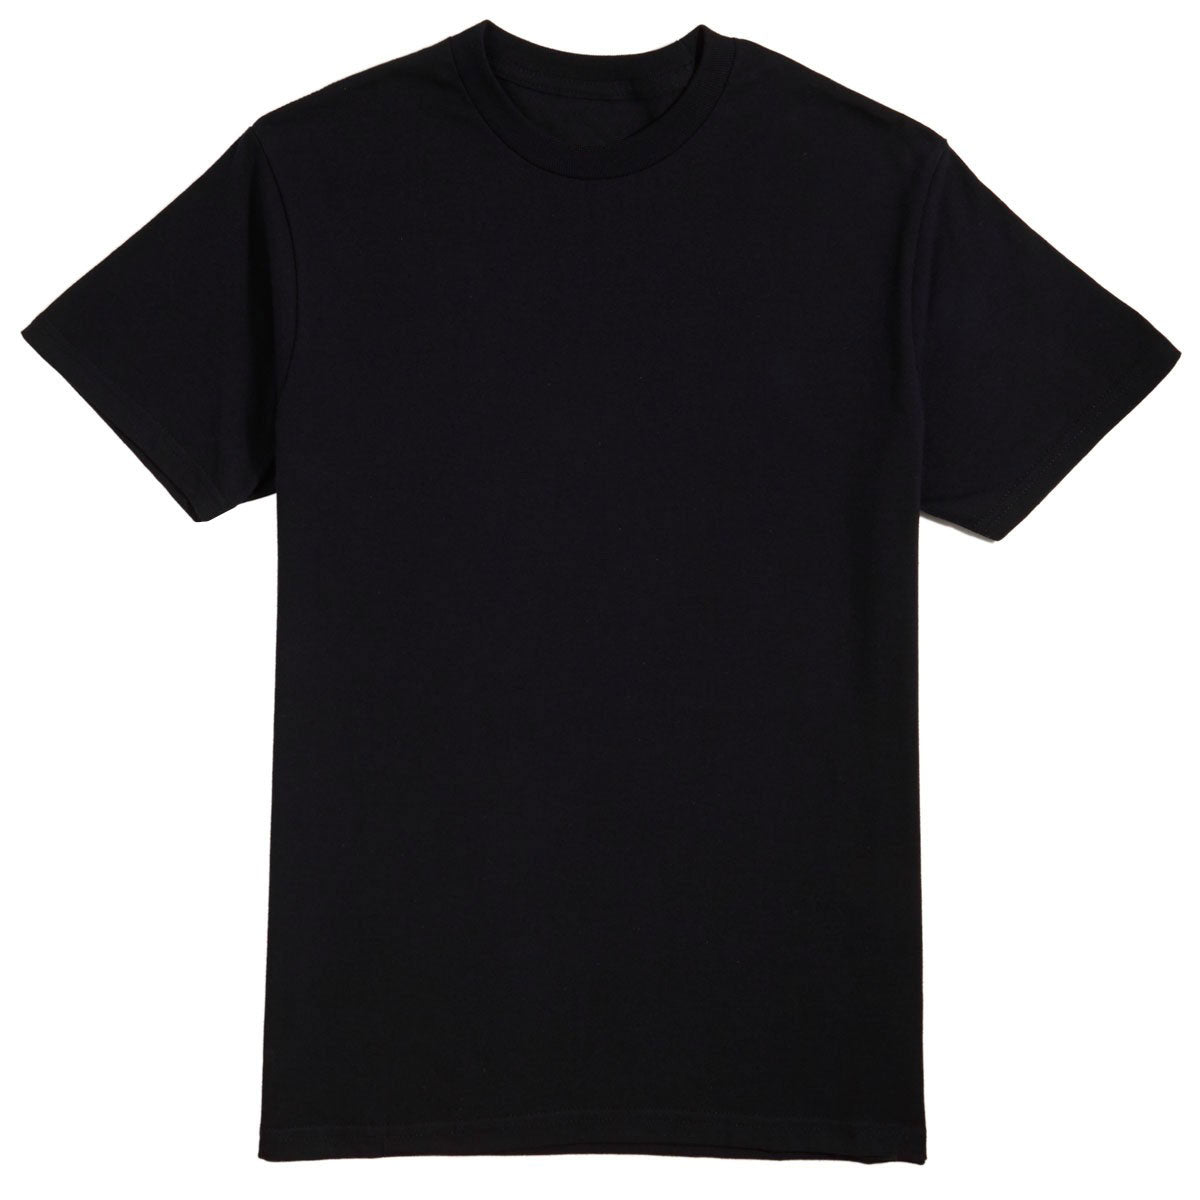 Converse Flash Sheet T-Shirt - Black - LG image 1